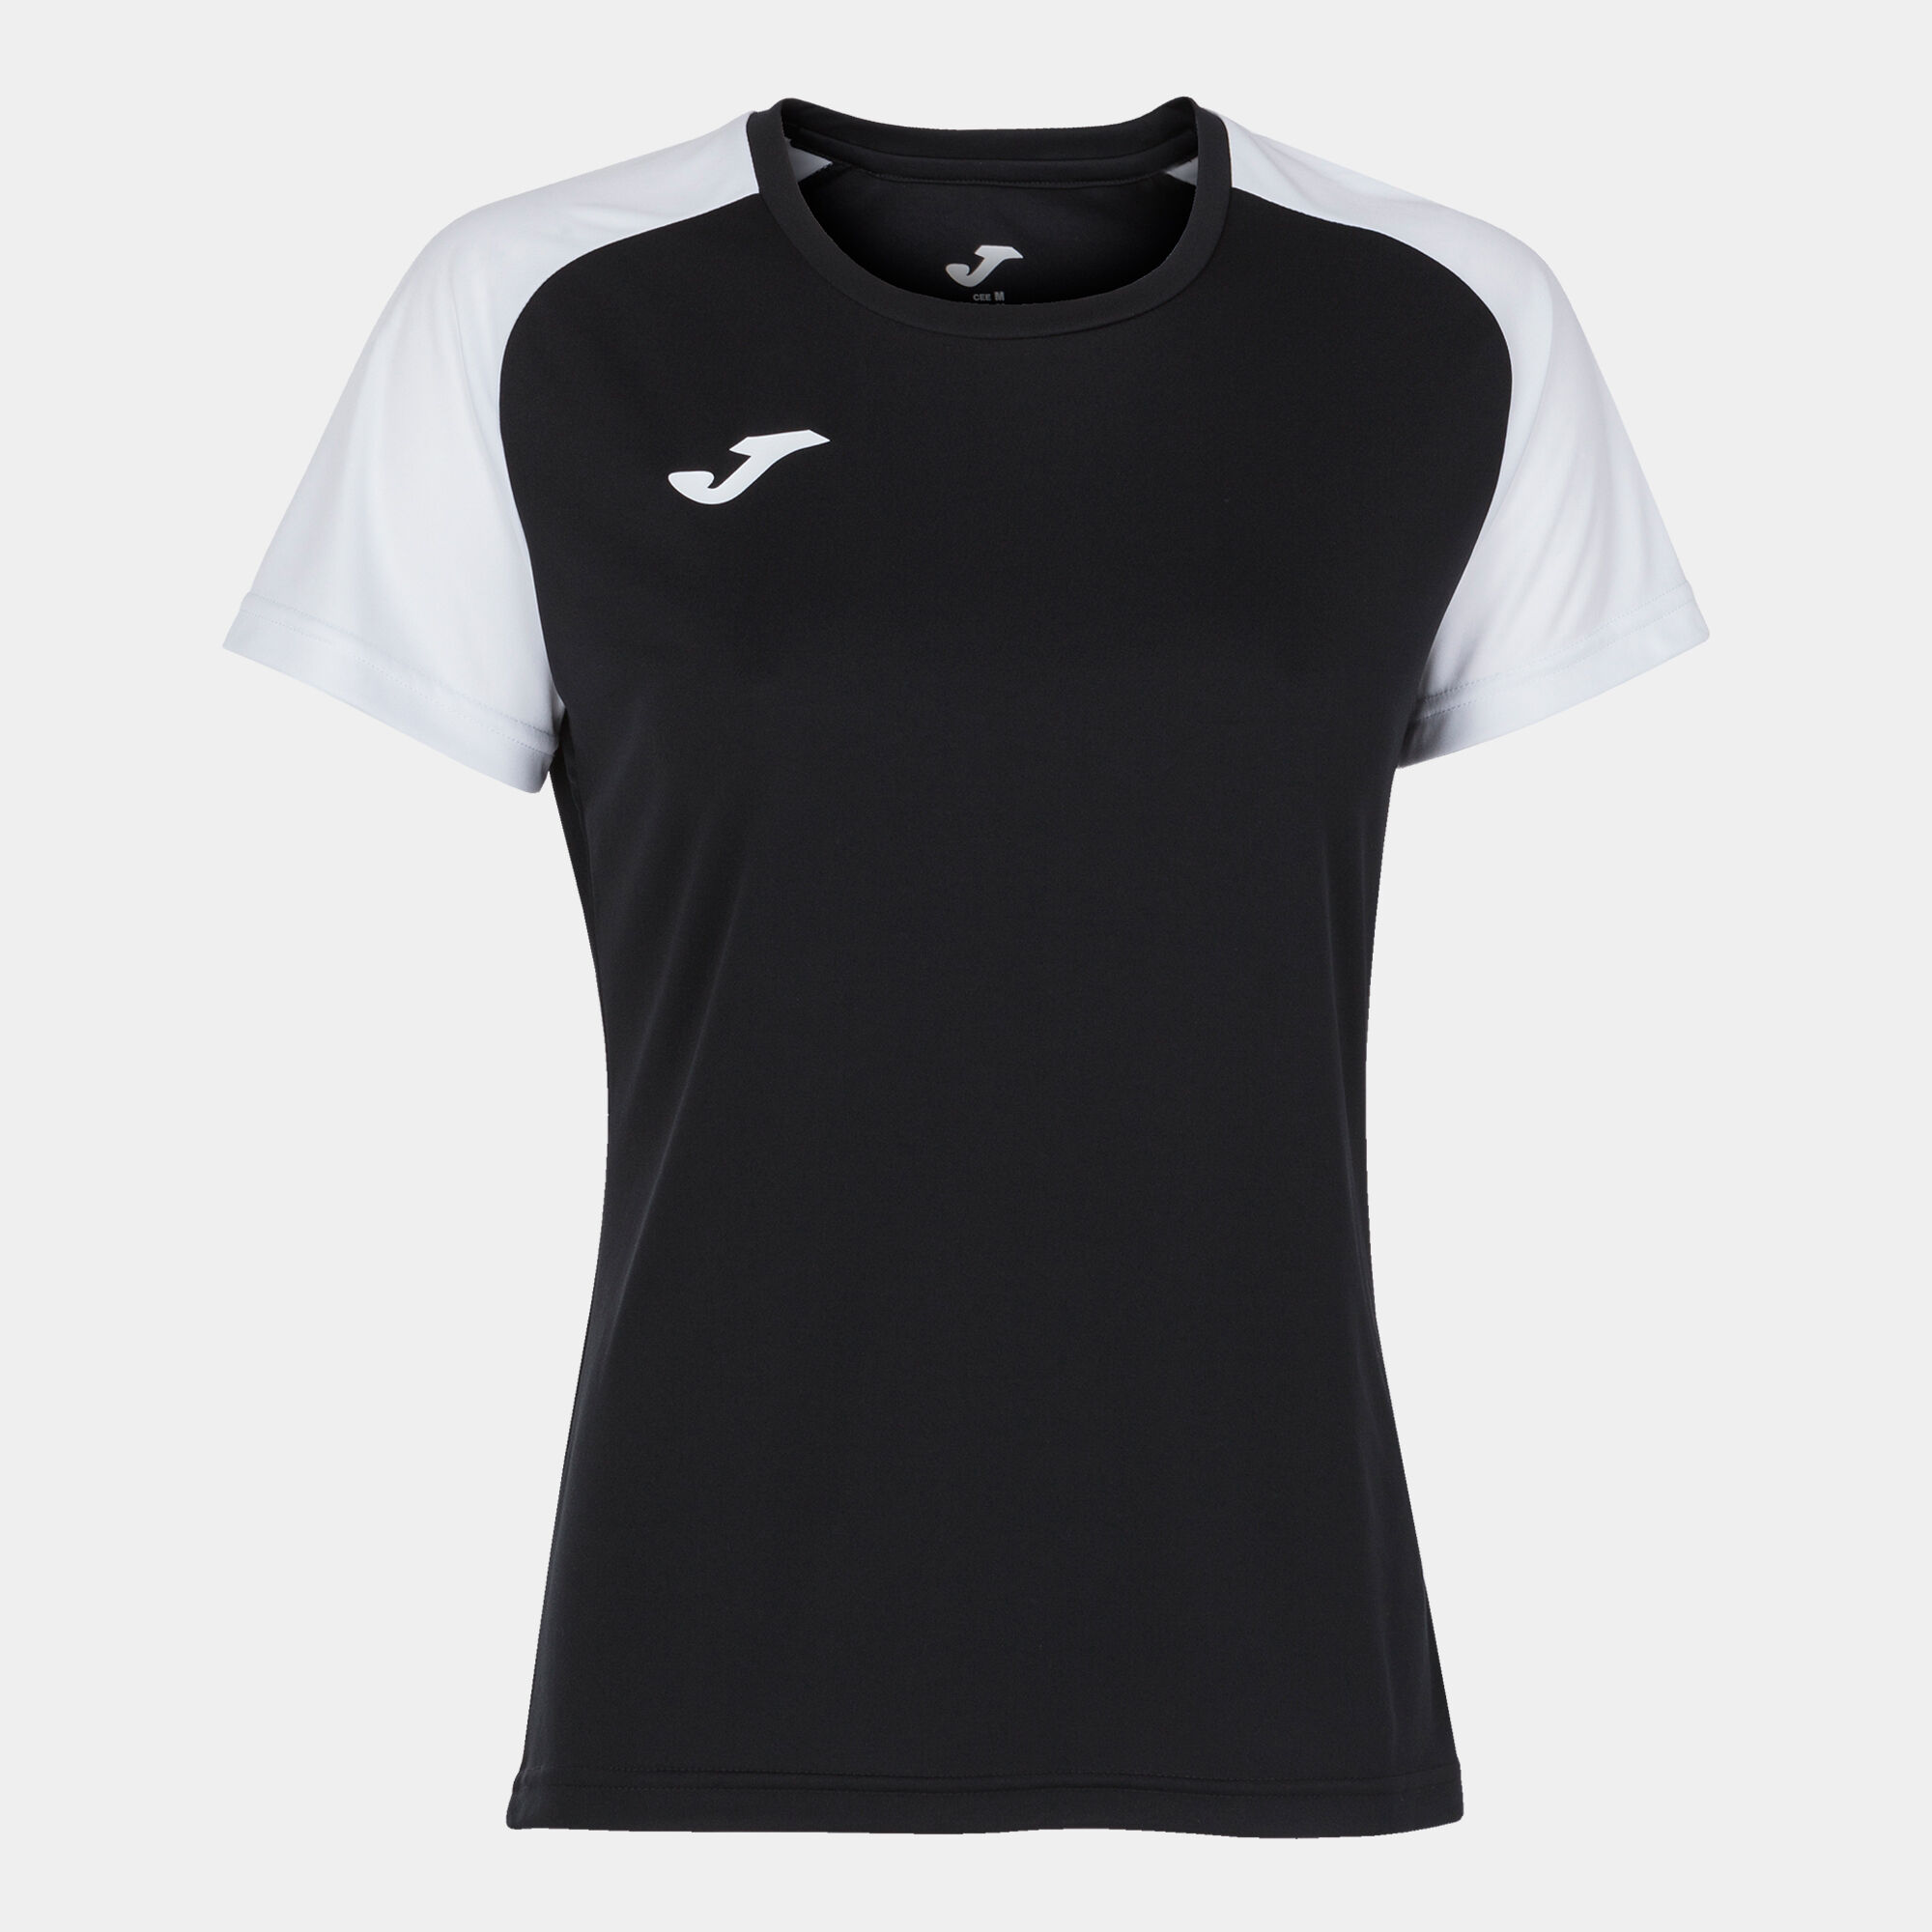 T-shirt manga curta mulher Academy IV preto branco